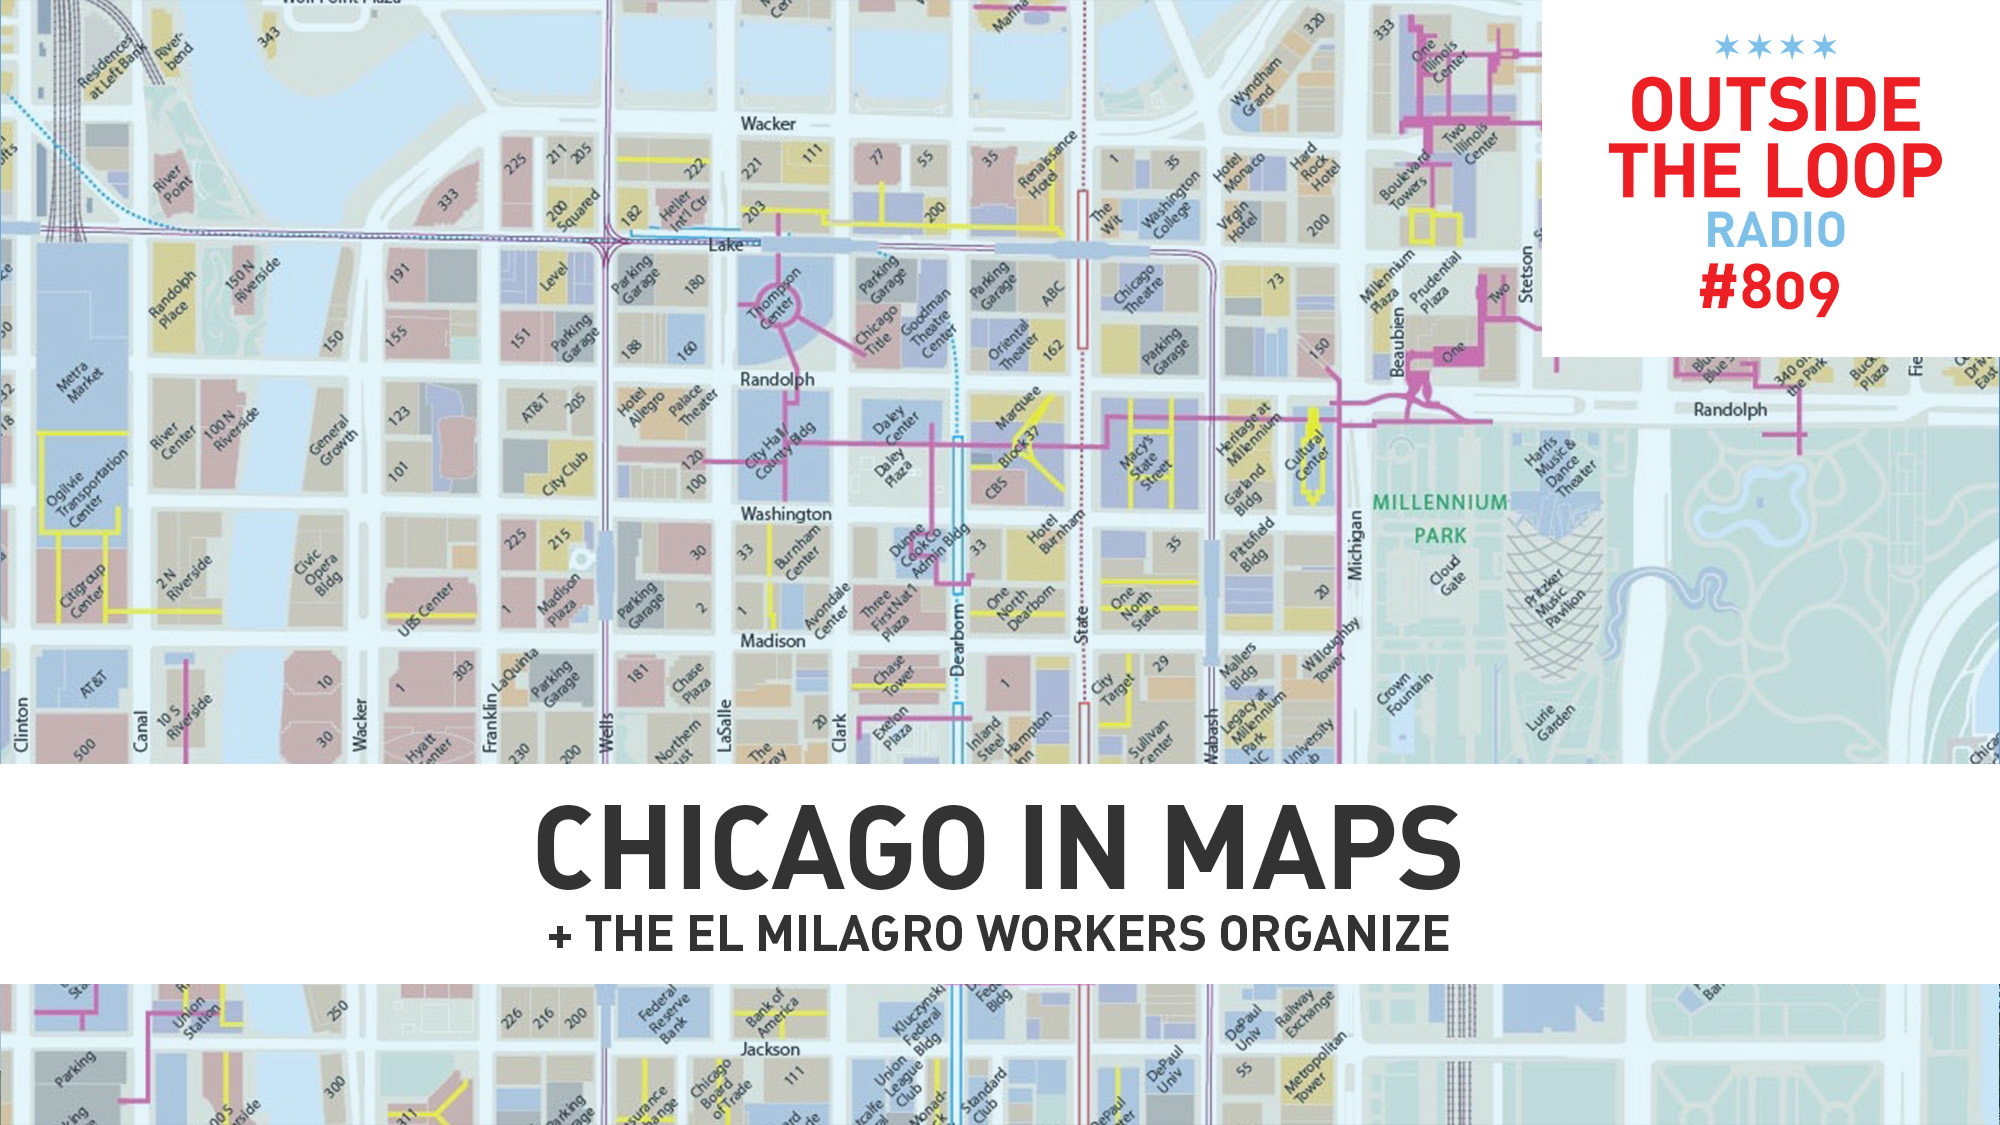 Dennis McClendon’s map of the Chicago Pedway. (Public Domain Photo)